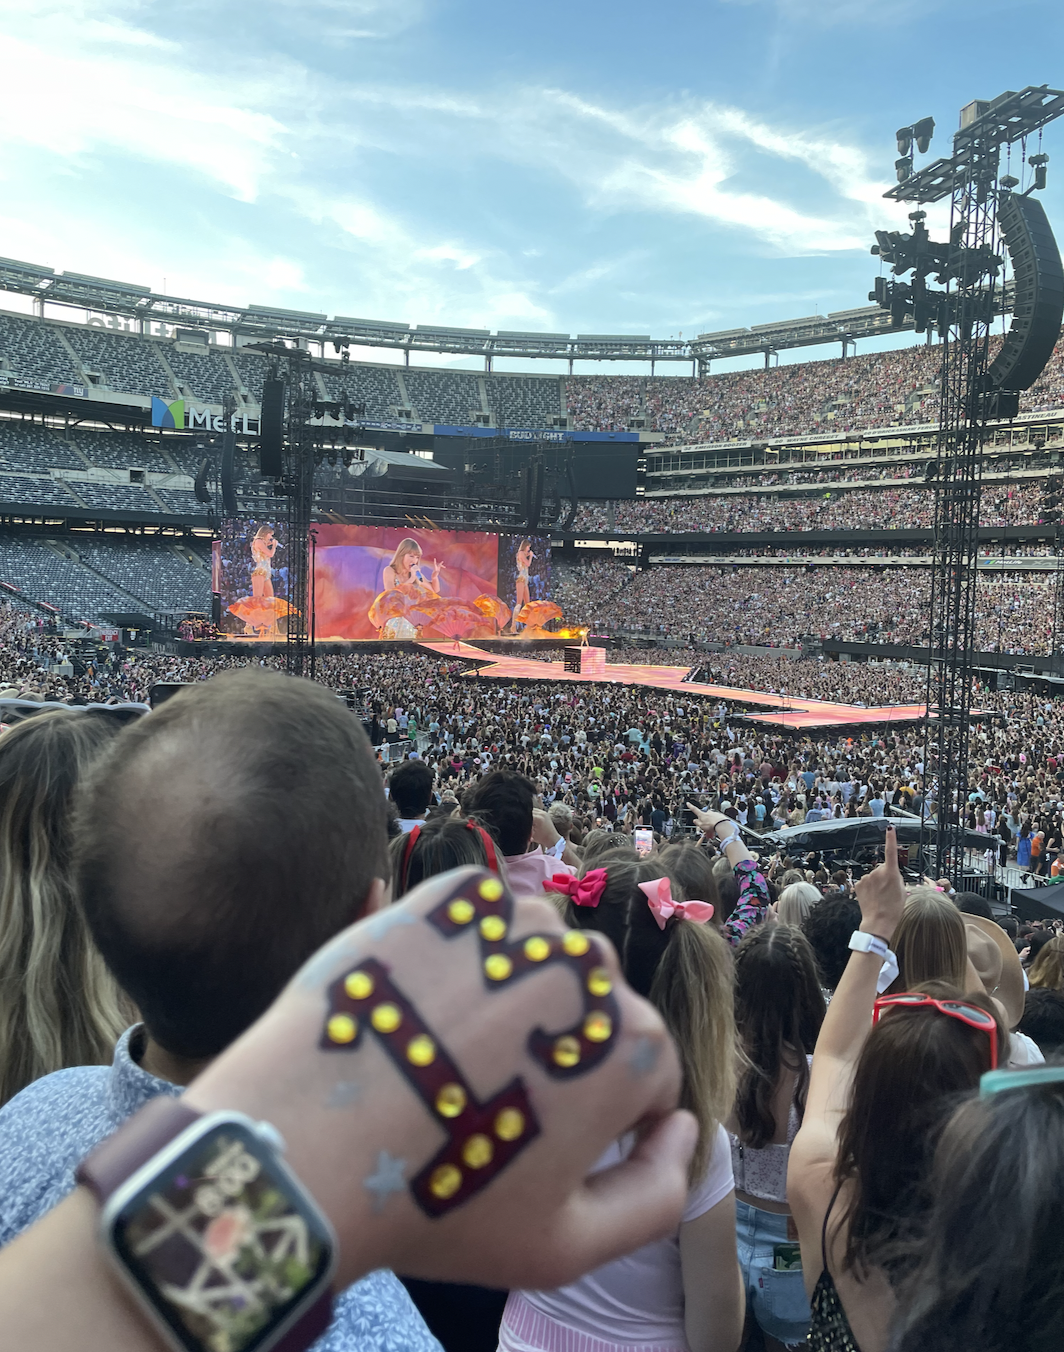 Taylor Swift reputation Stadium Tour - Plugged In